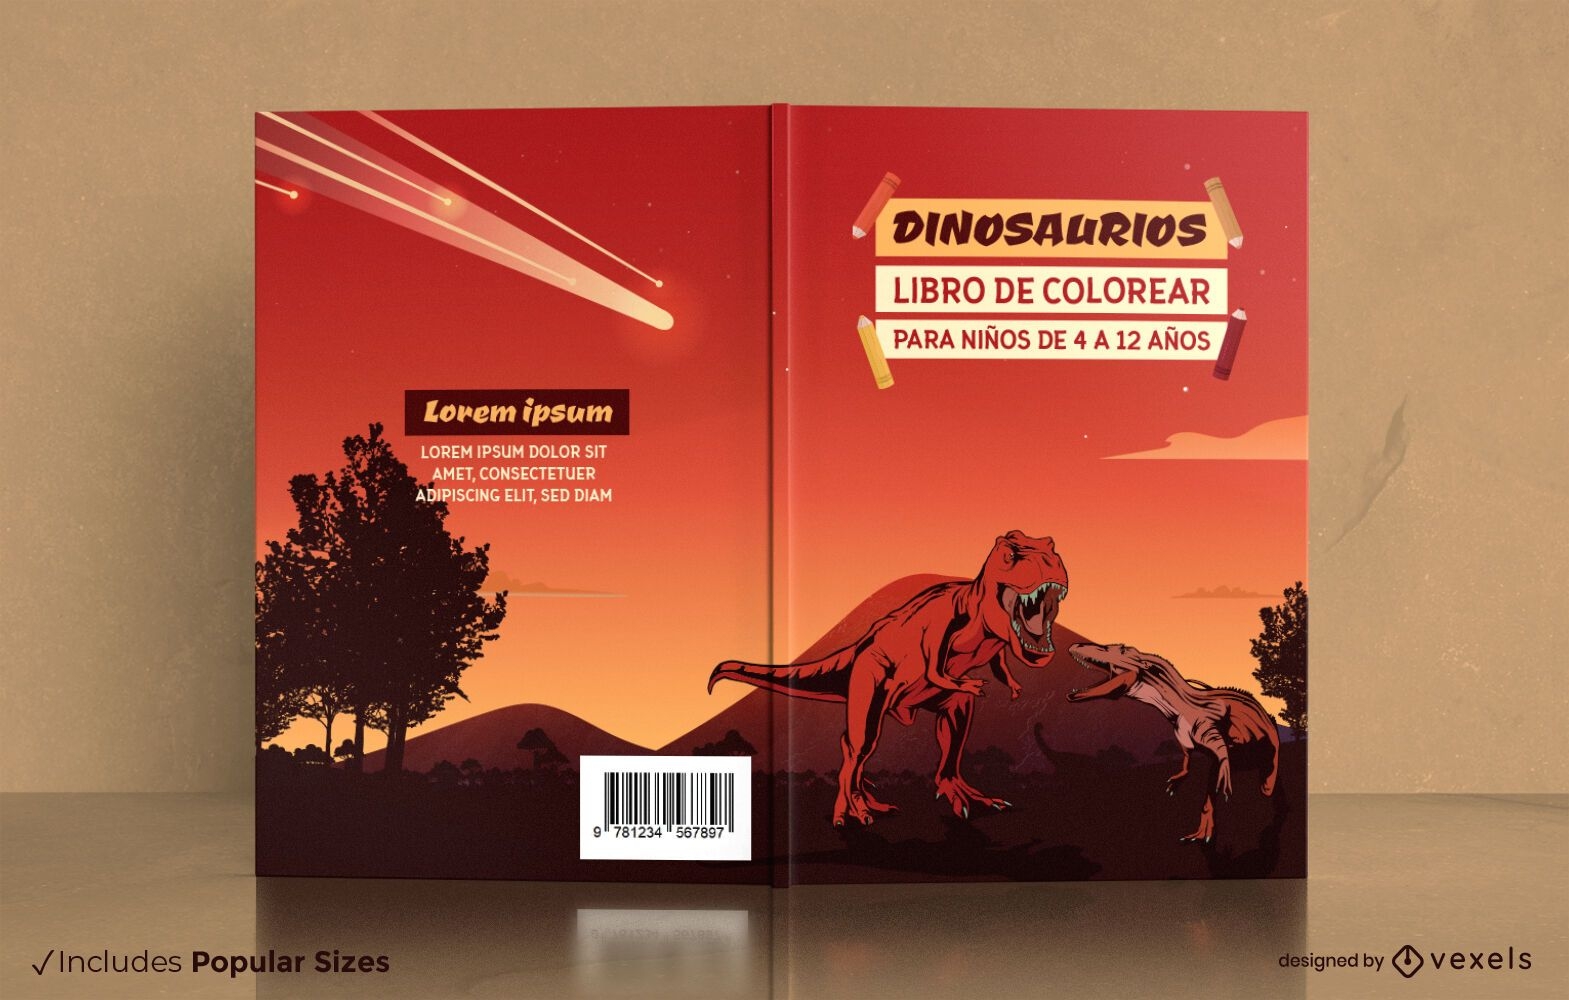 Dinosaur coloring book for children cover design